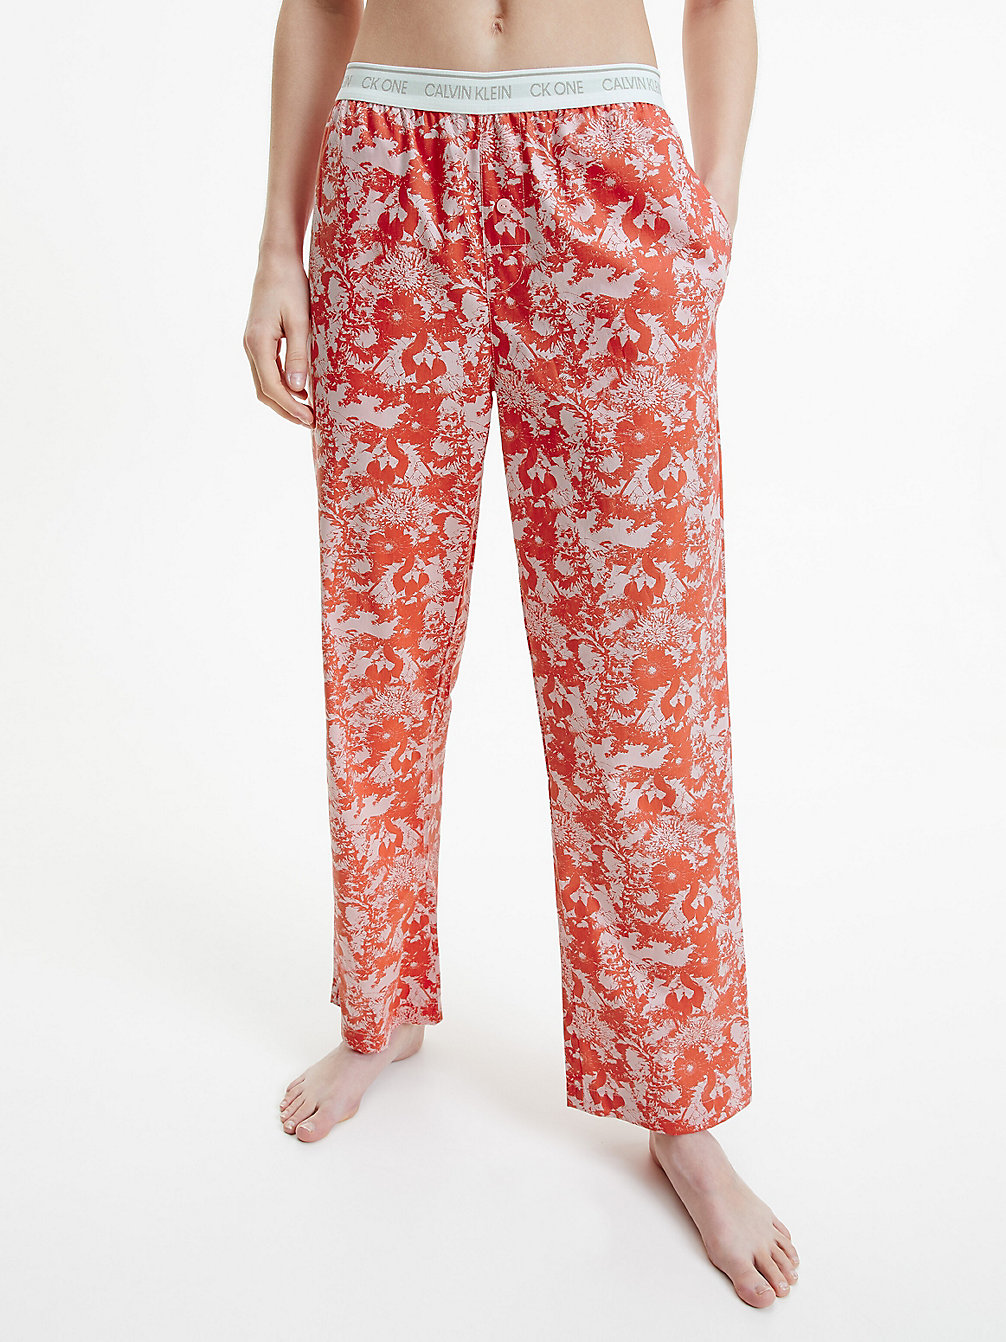 Pantalón De Pijama - CK One > SOLAR FLORAL PRINT_PINK SHELL > undefined mujer > Calvin Klein